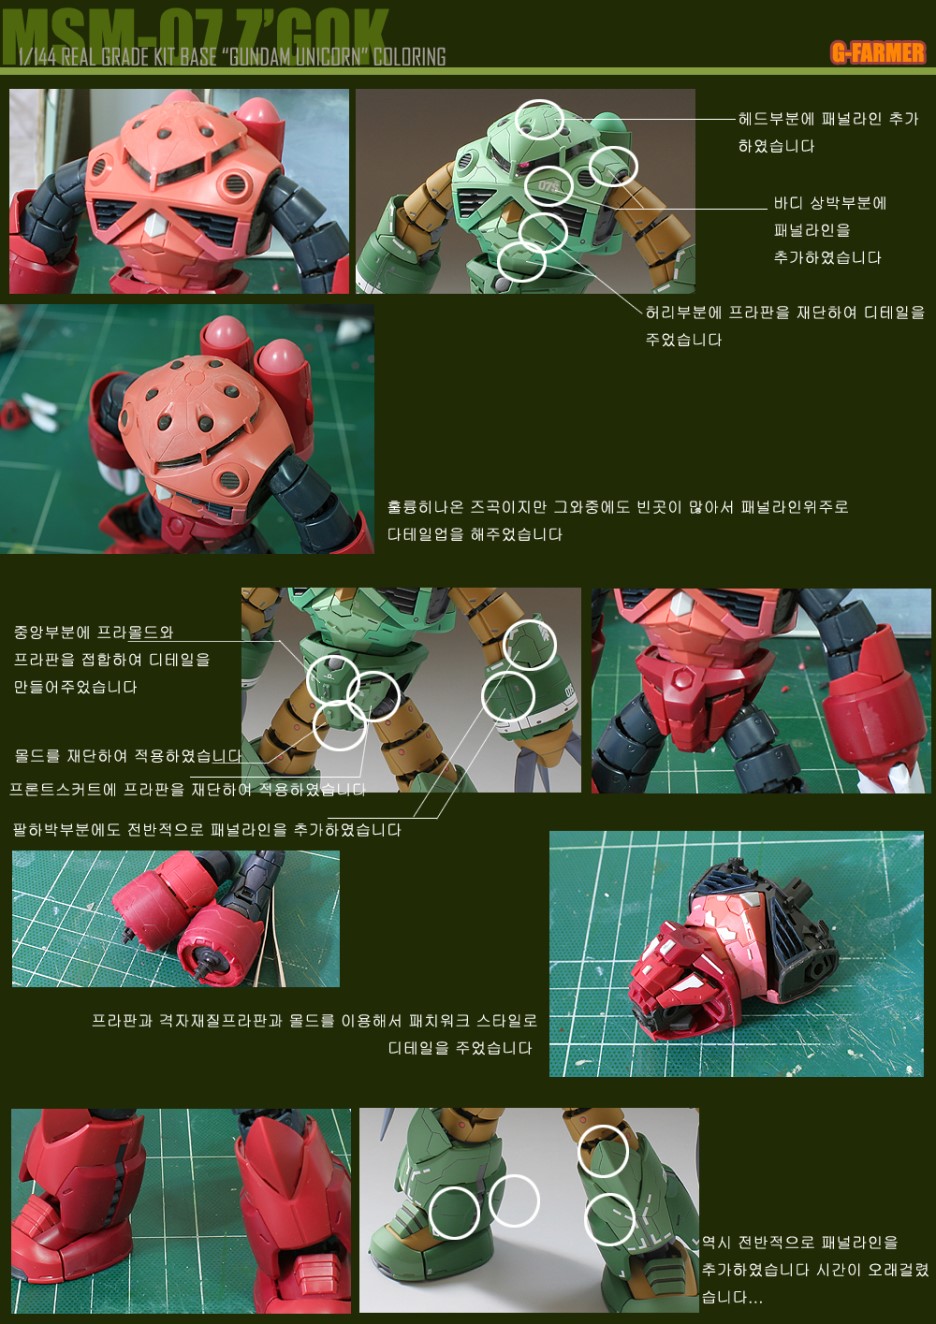 Gundam Z'gok 12' X 18 Print Penciled/finished 